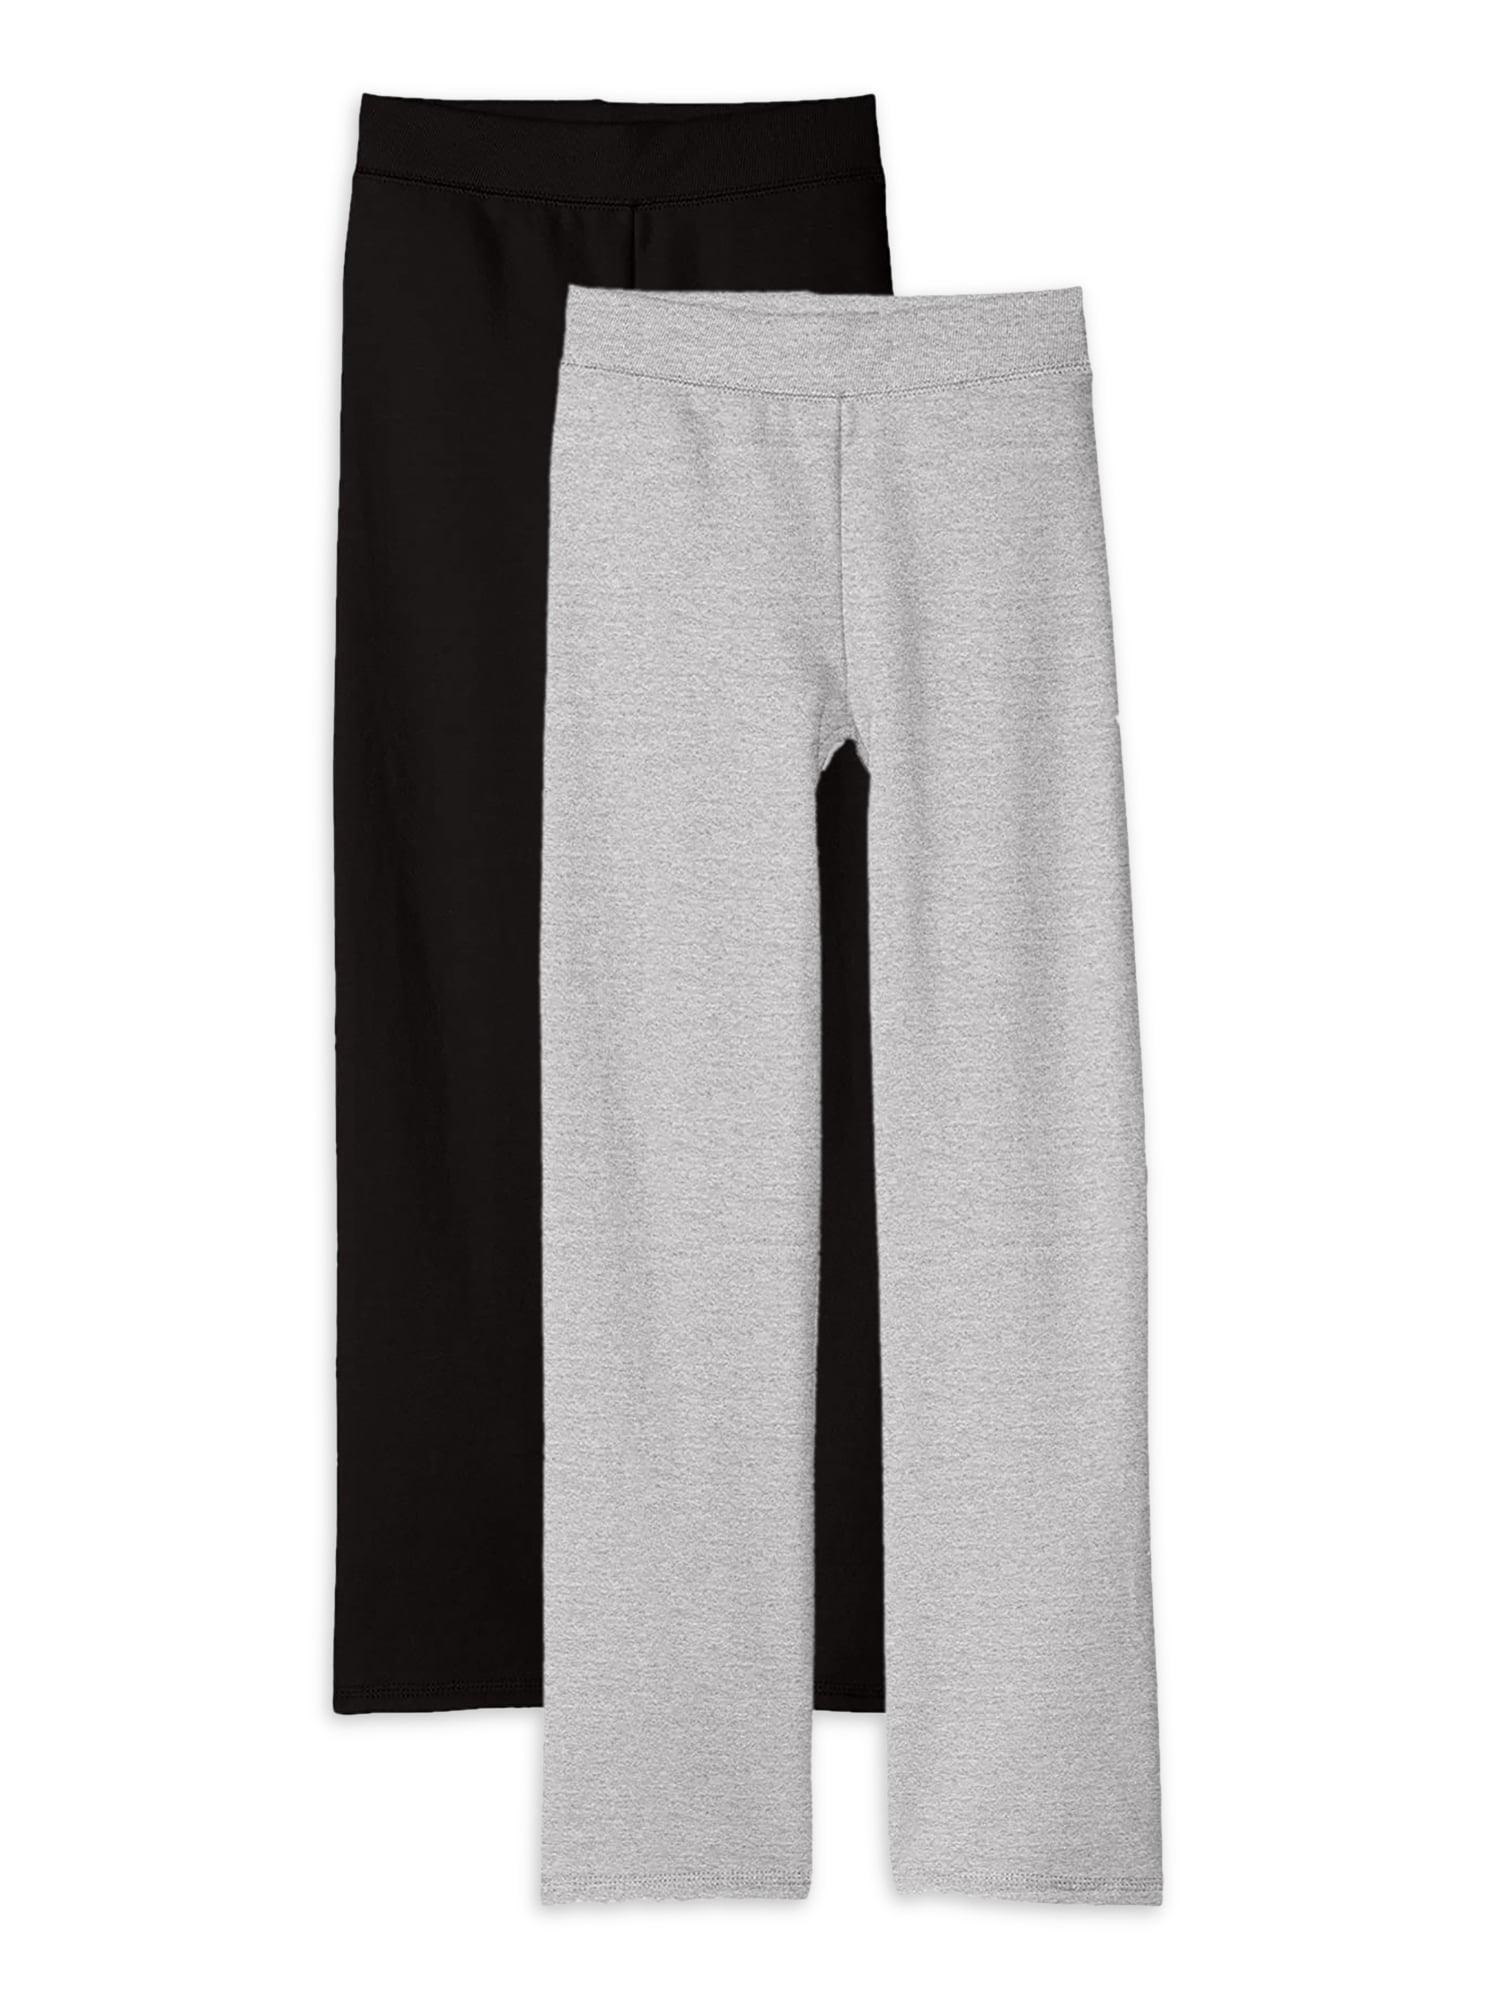 Hanes Girls ComfortSoft EcoSmart Fleece Open Bottom Leg Sweatpants, 2-Pack,  Sizes 4-16 